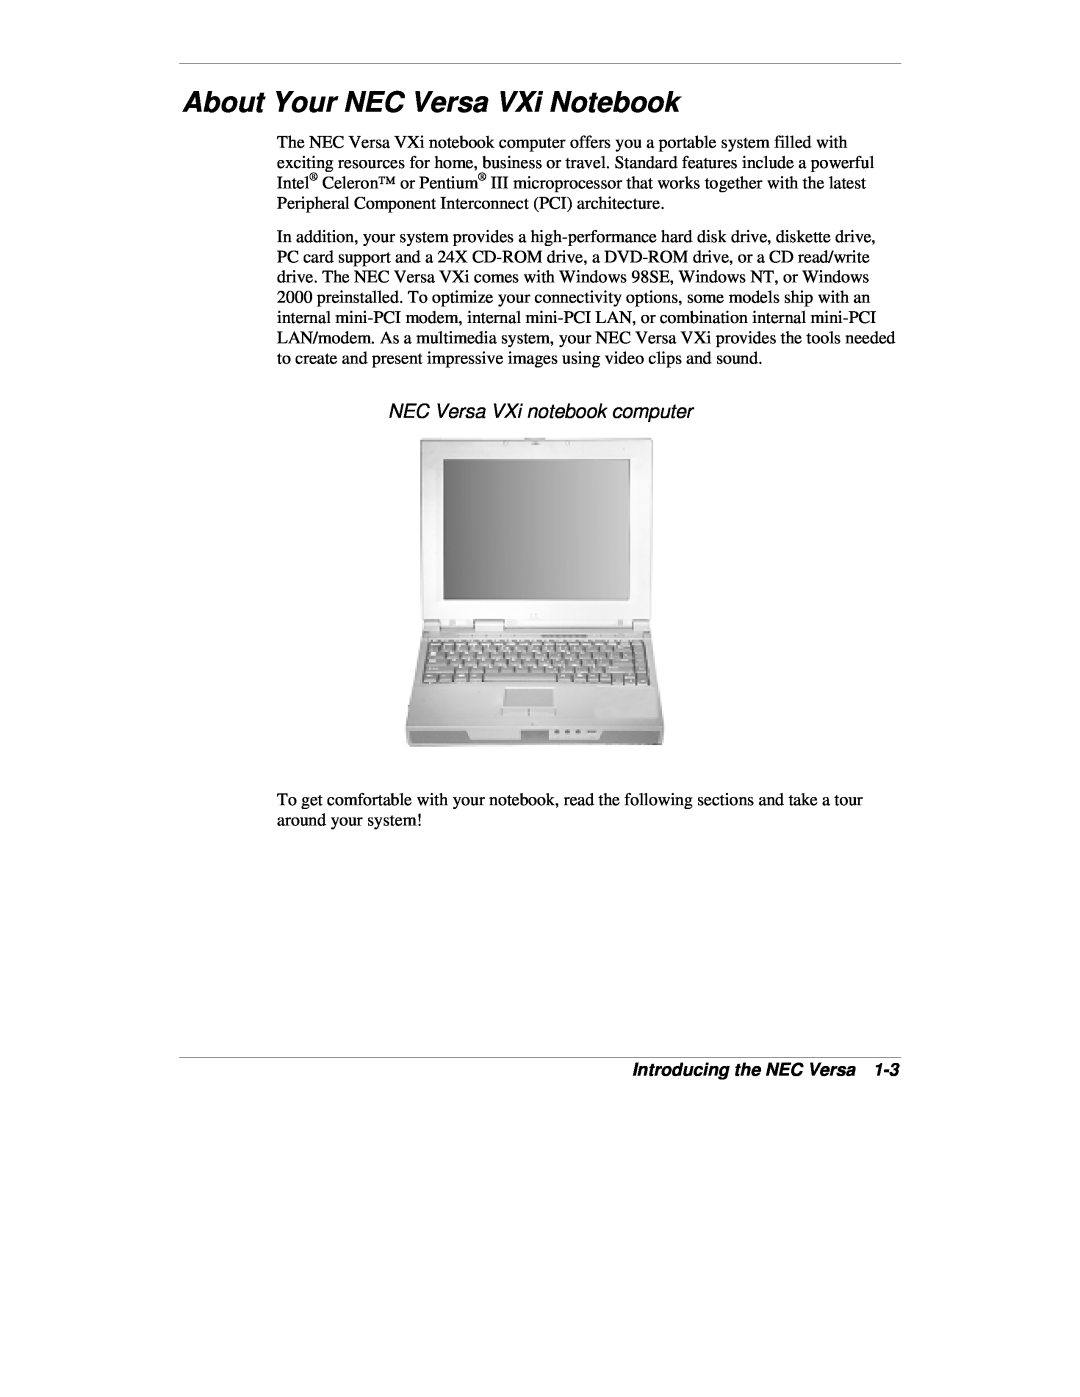 NEC manual About Your NEC Versa VXi Notebook, NEC Versa VXi notebook computer, Introducing the NEC Versa 